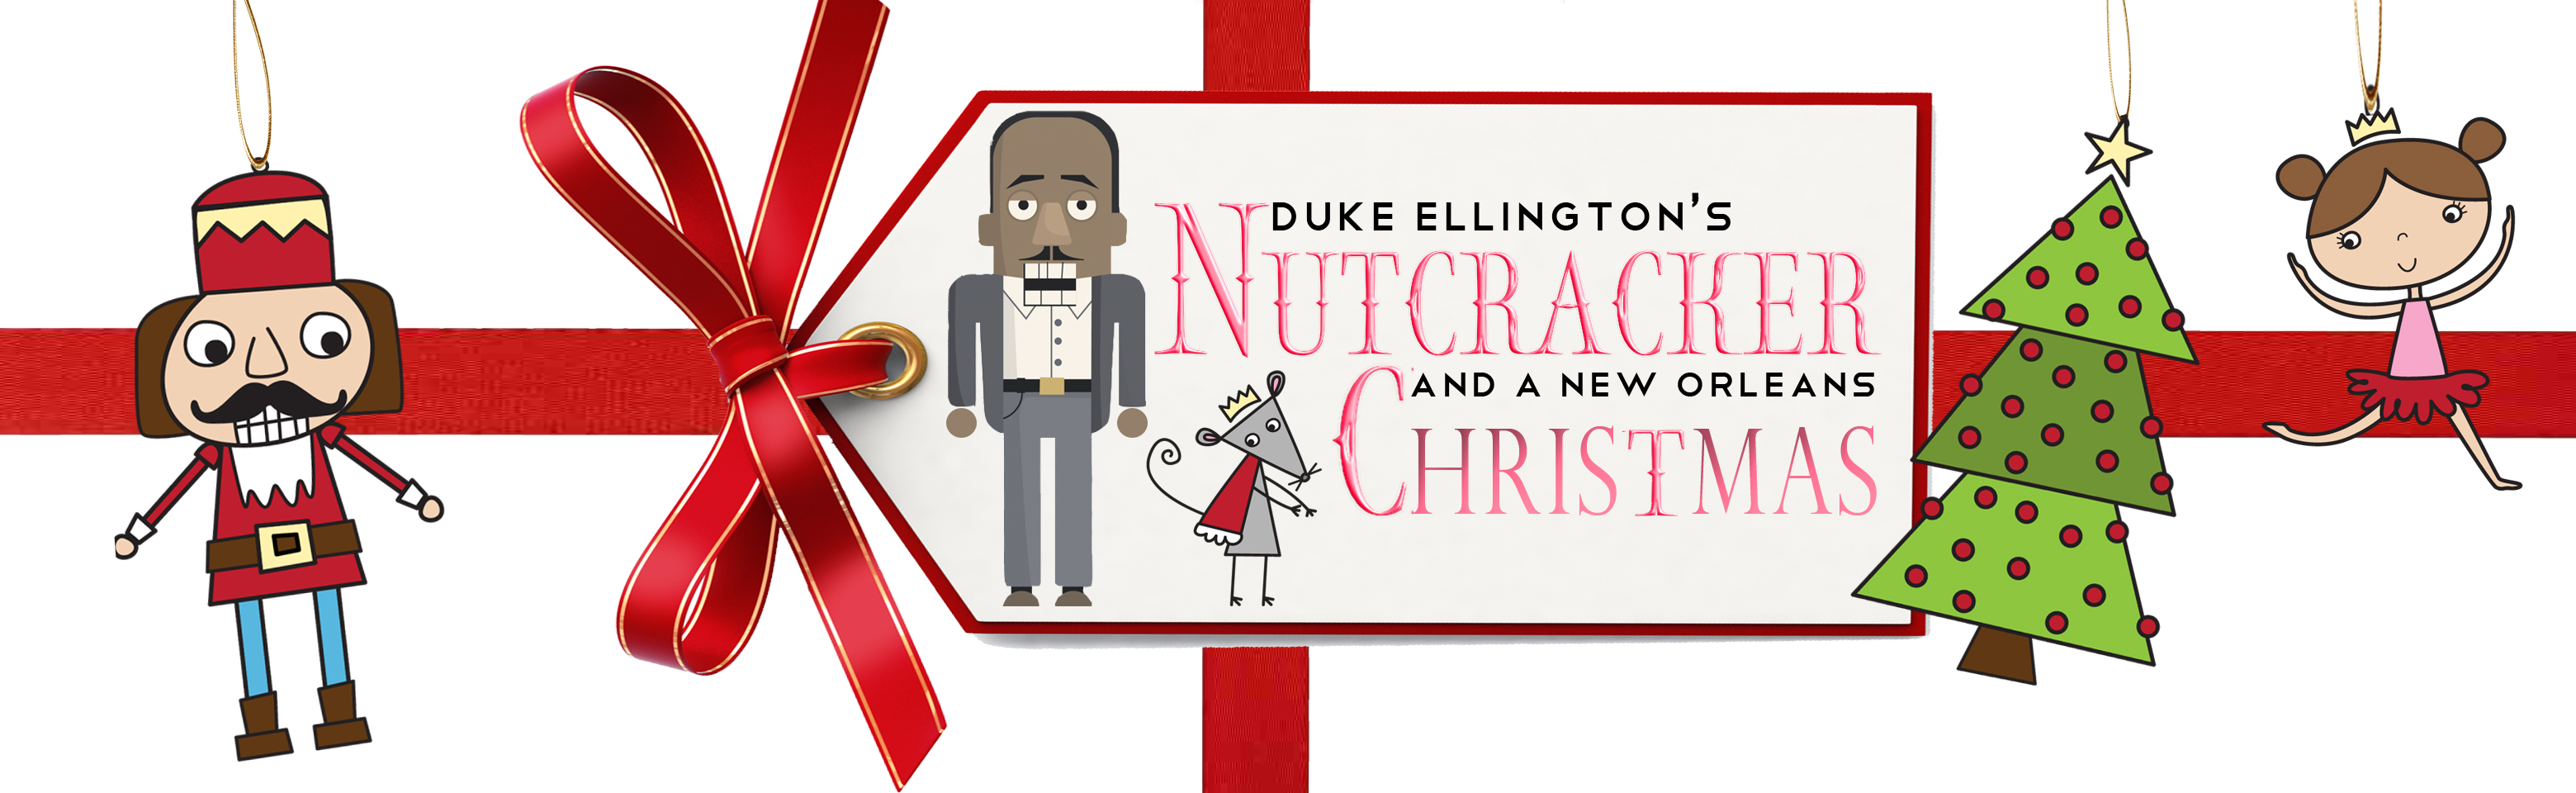 Cool Your Yule with Duke Ellington's Nutcracker